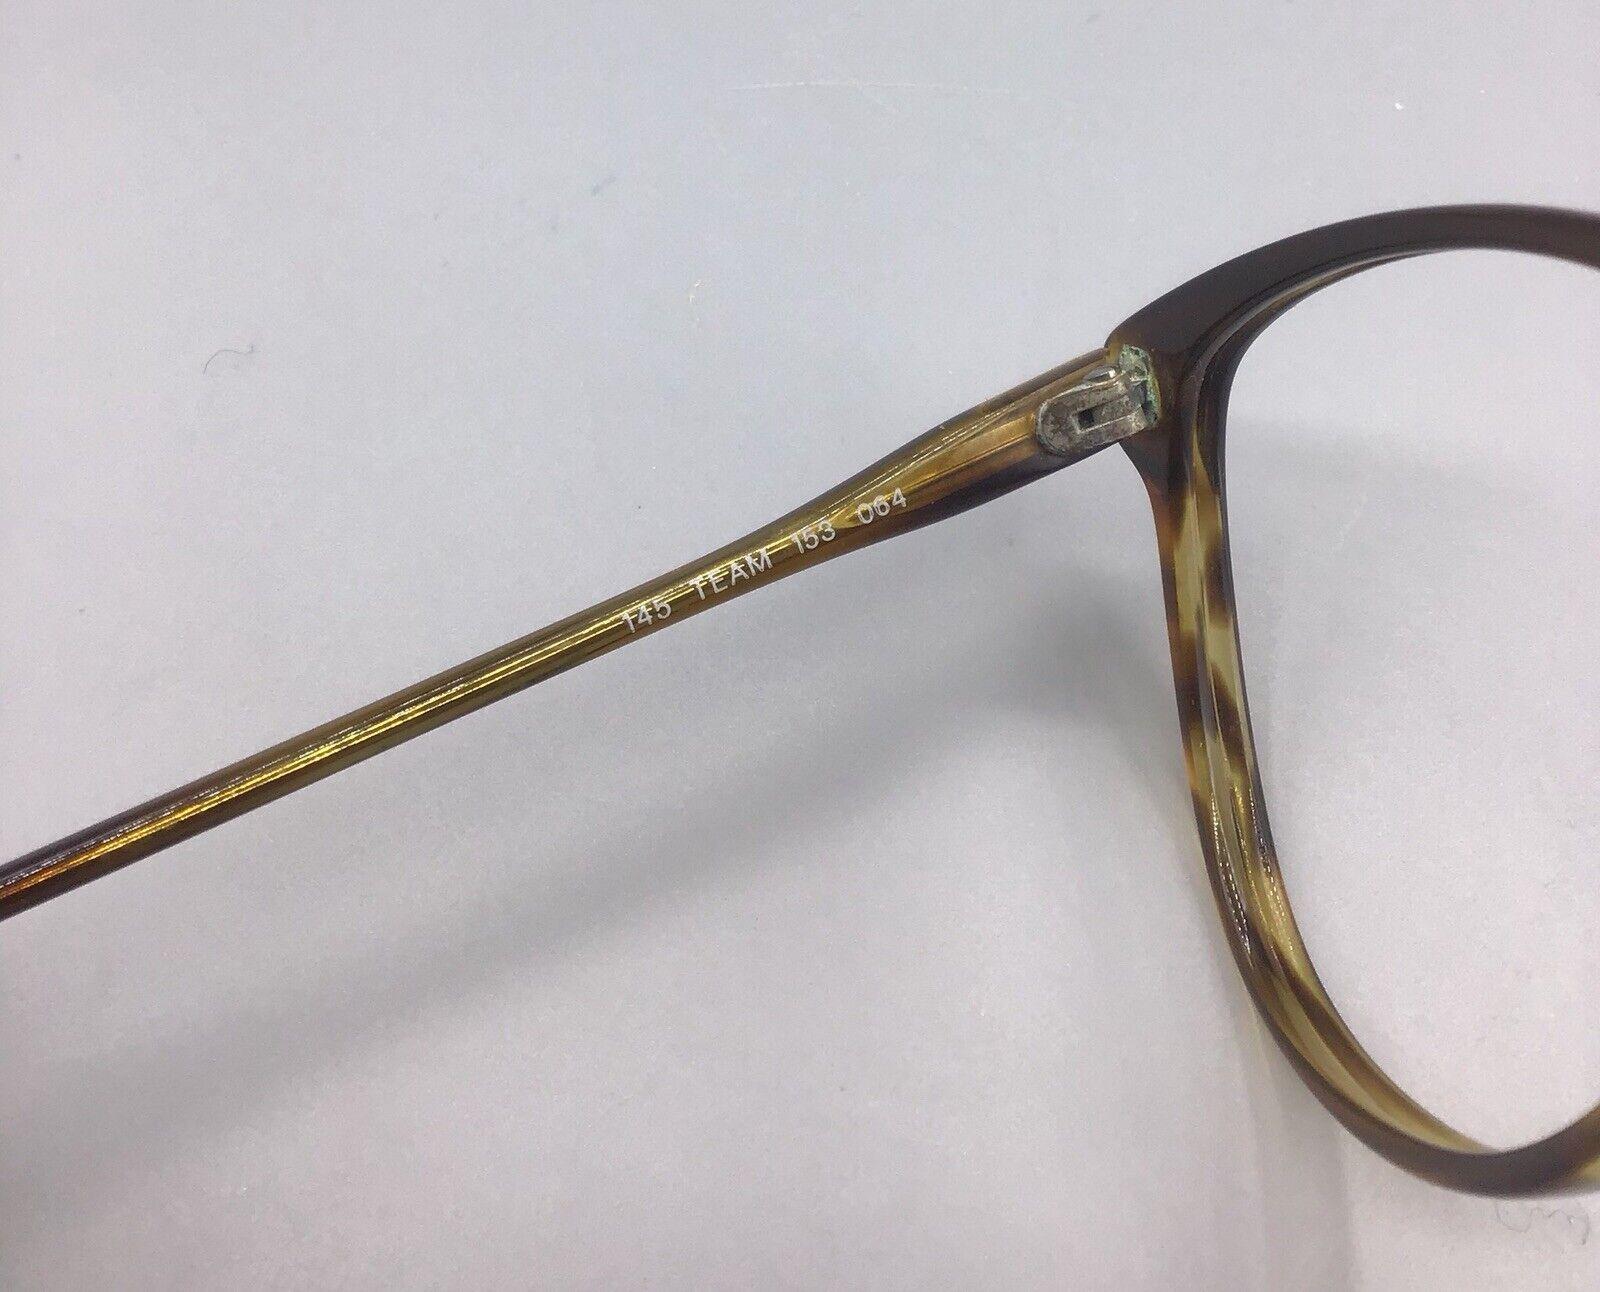 Safilo occhiale vintage eyewear team 153 054 frame italy brillen lunettes